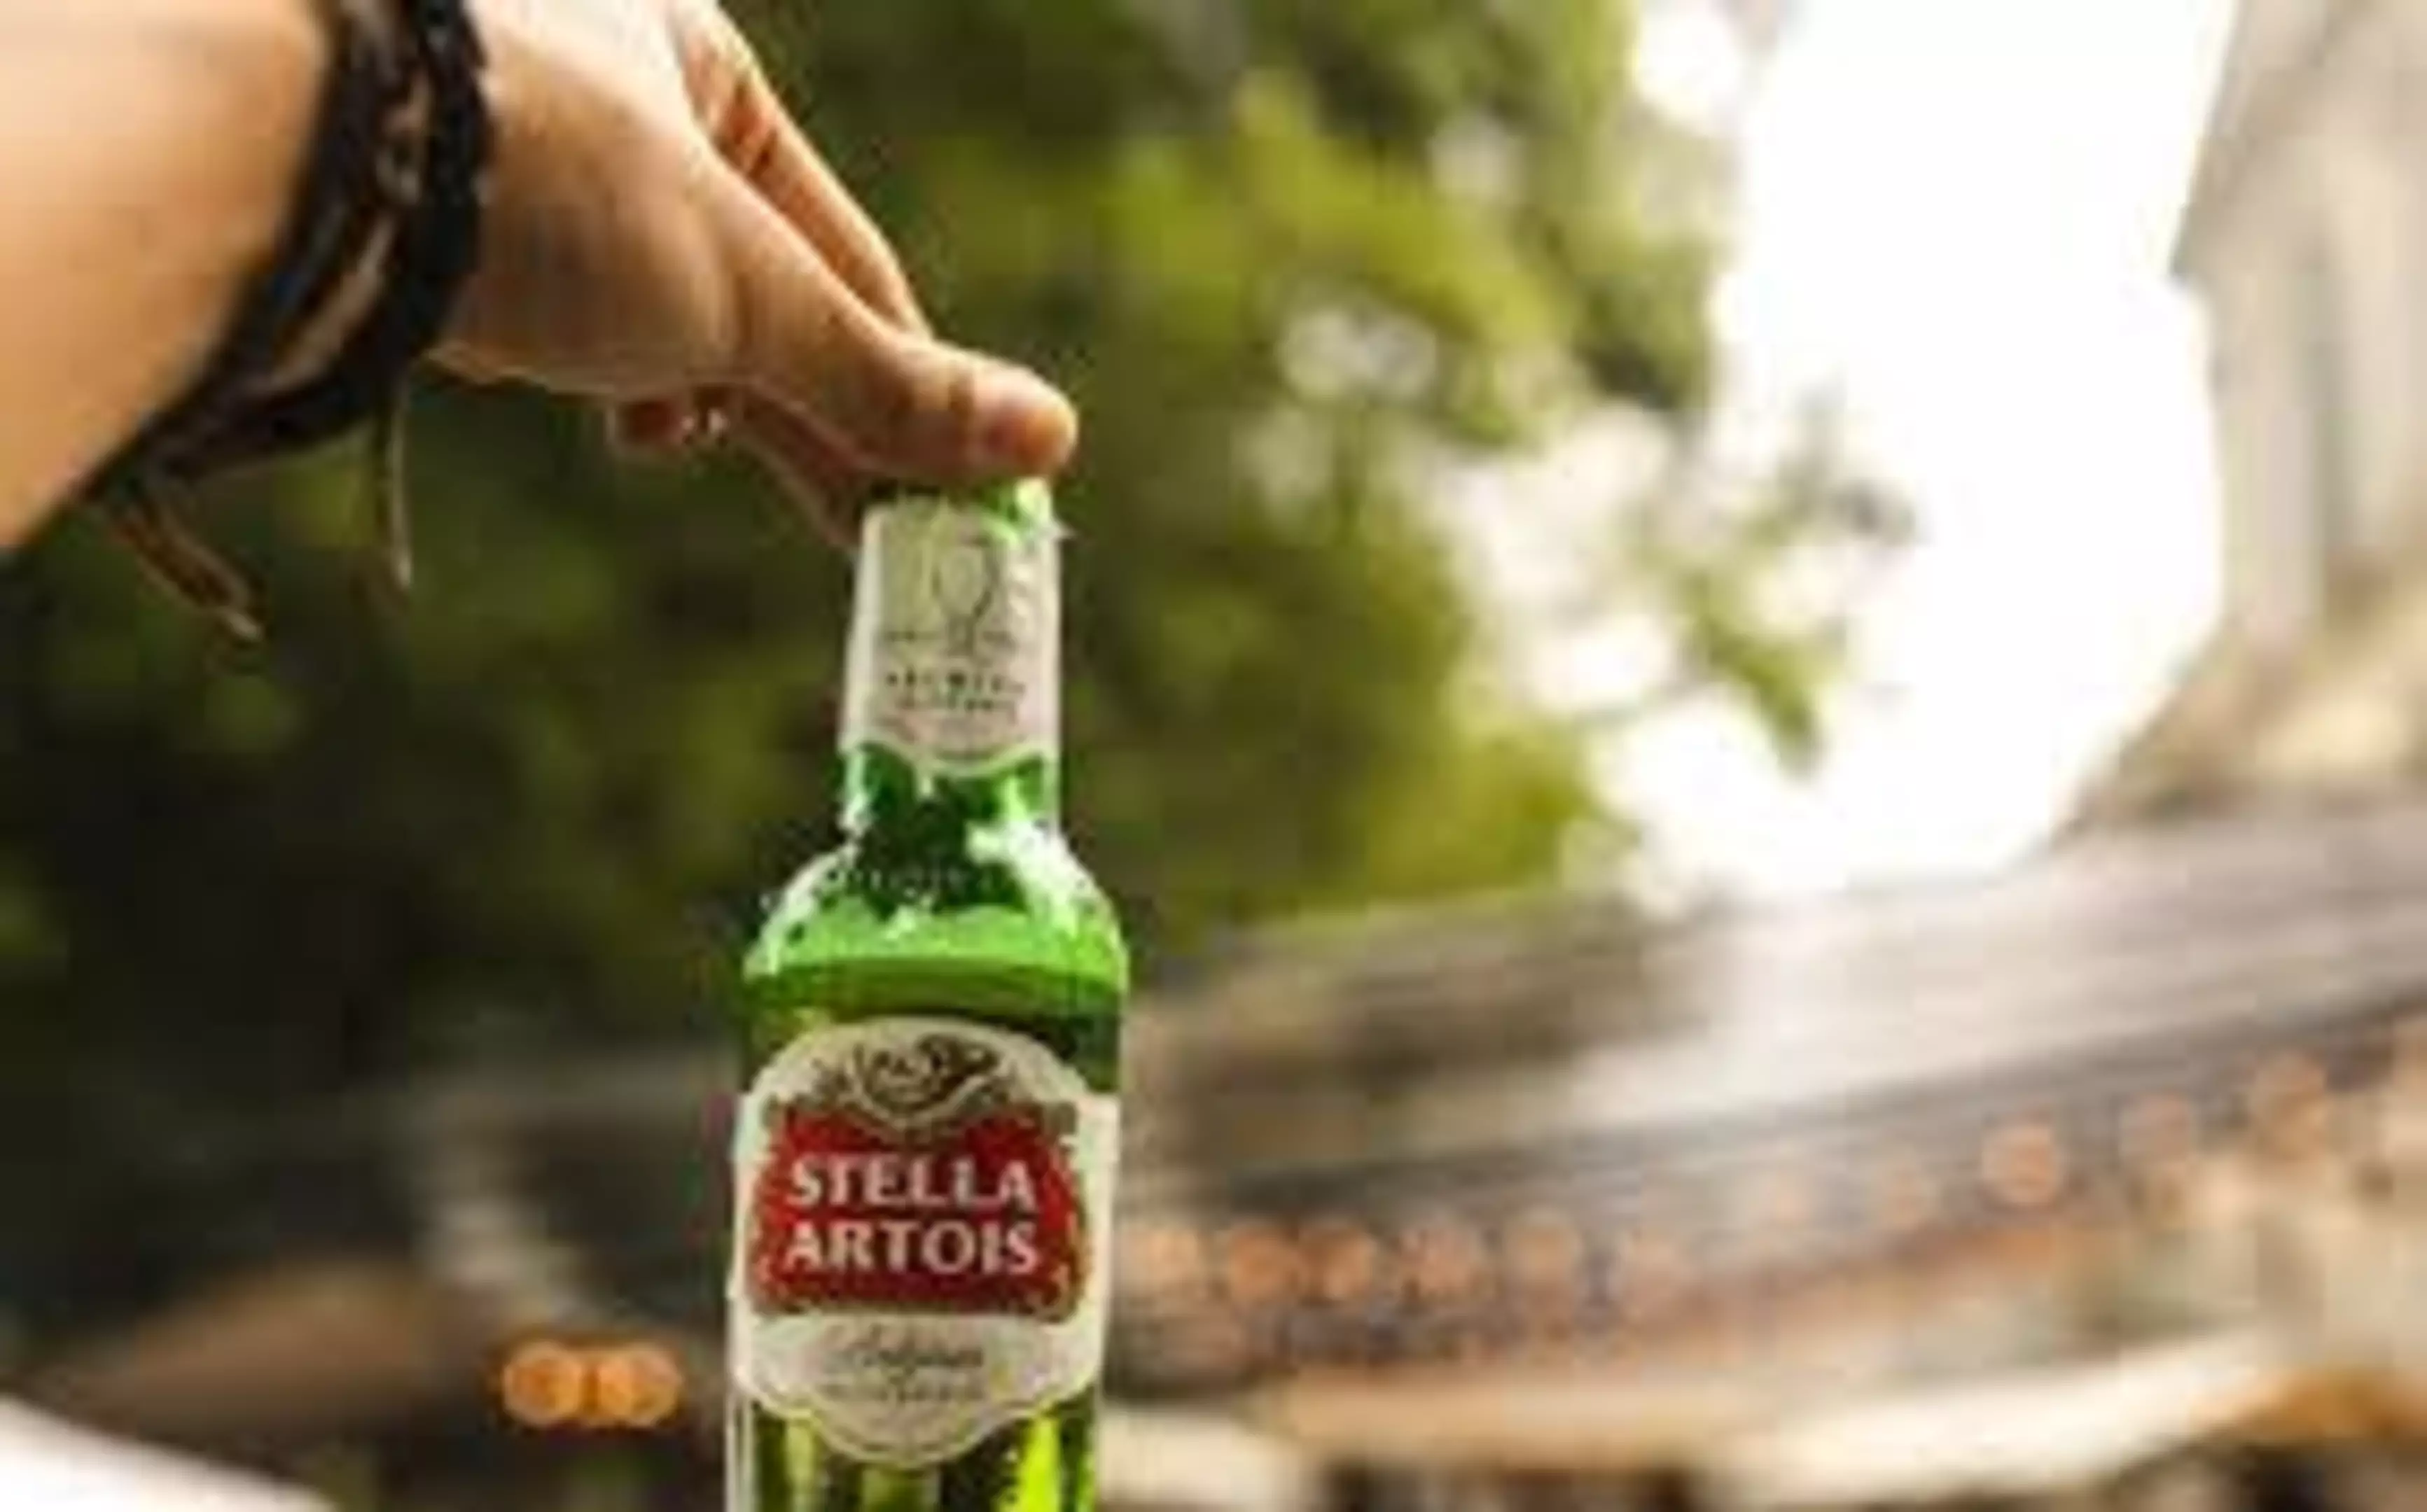 Cerveja Stella Artois